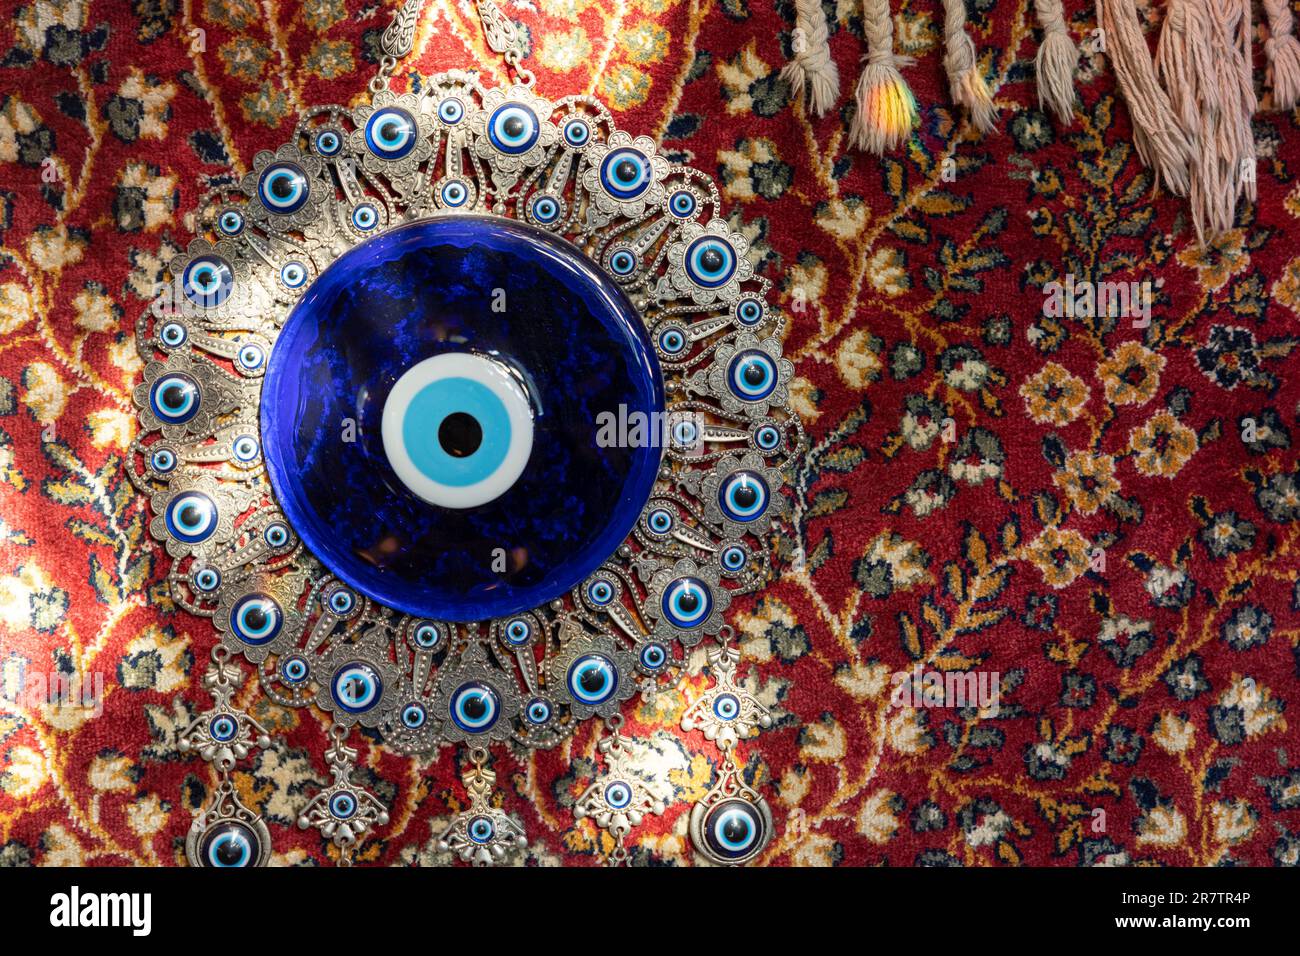 The Blue Turkish Evil Eye Nazar Amulet or Nazar Boncugu blue sapphire charm souvenir from Turkey Stock Photo